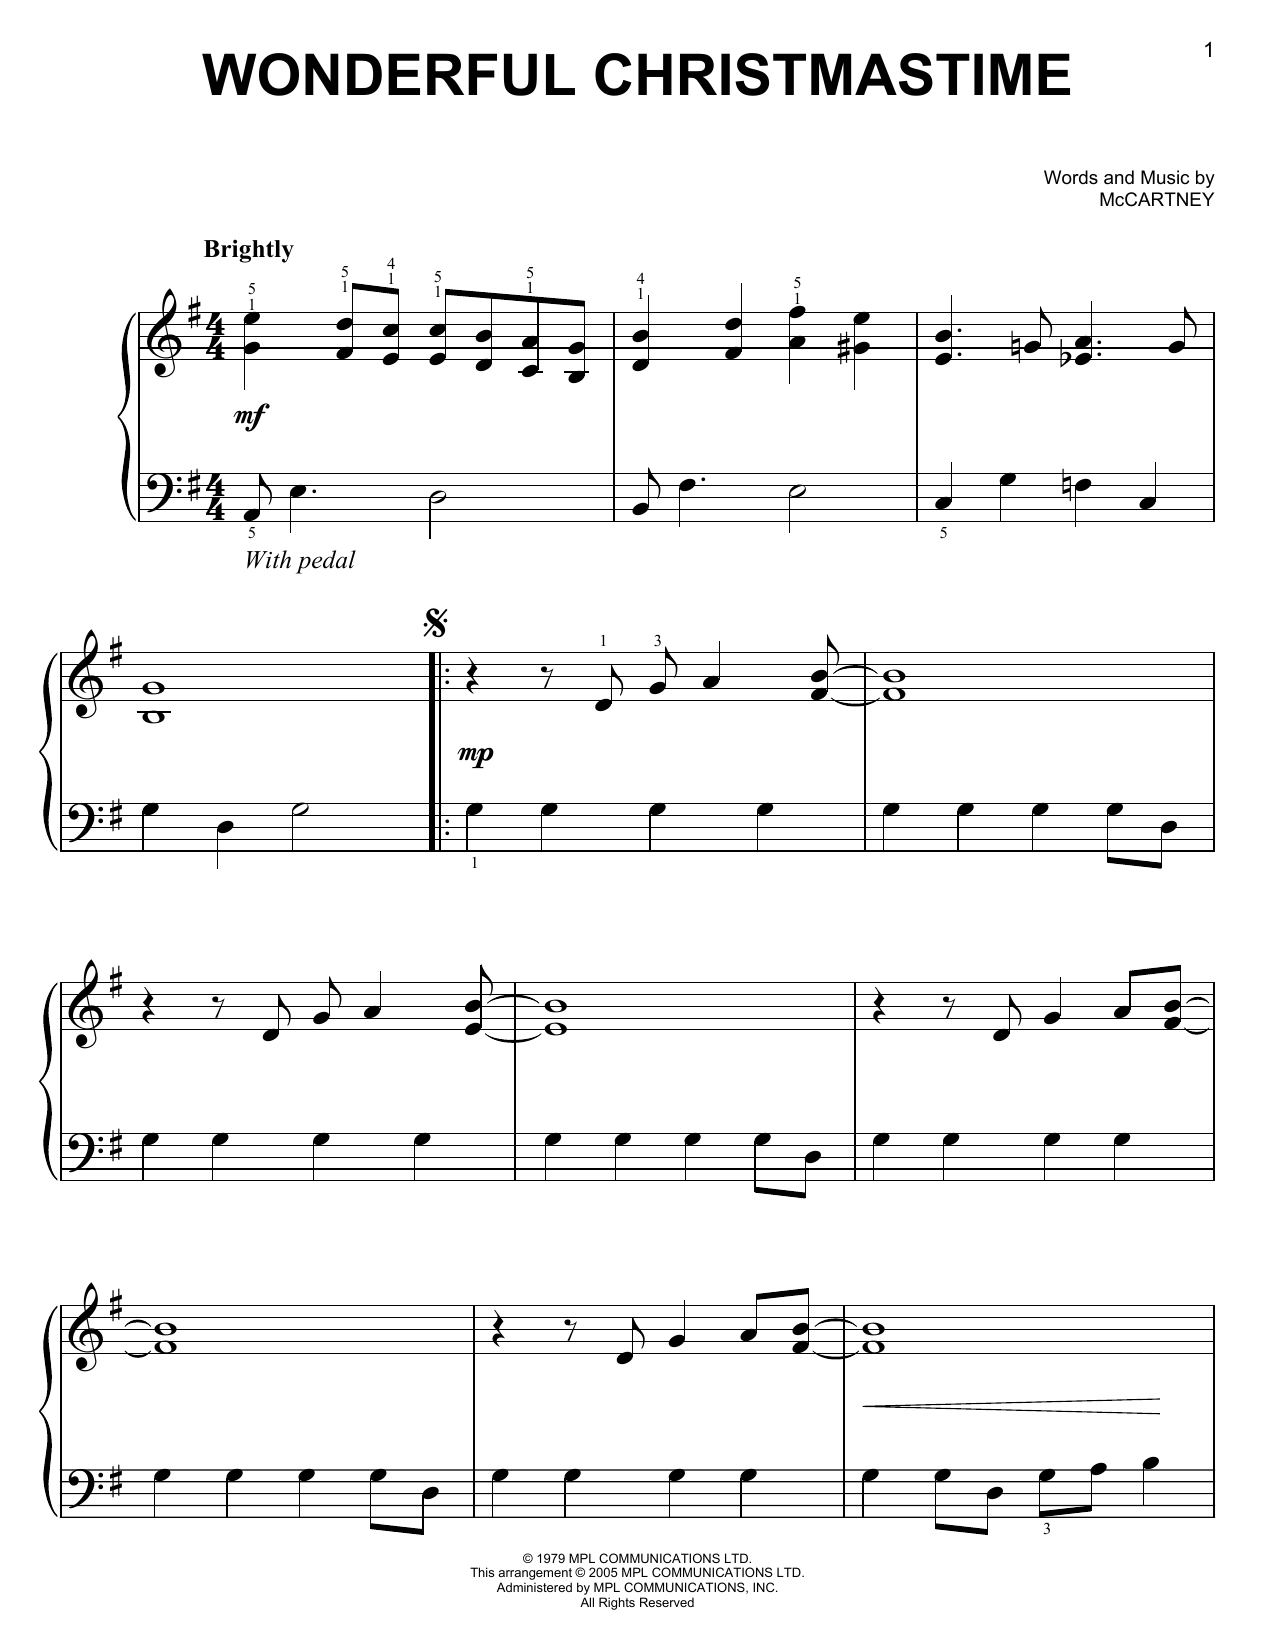 Wonderful Christmastime (Easy Piano Solo) von Paul McCartney